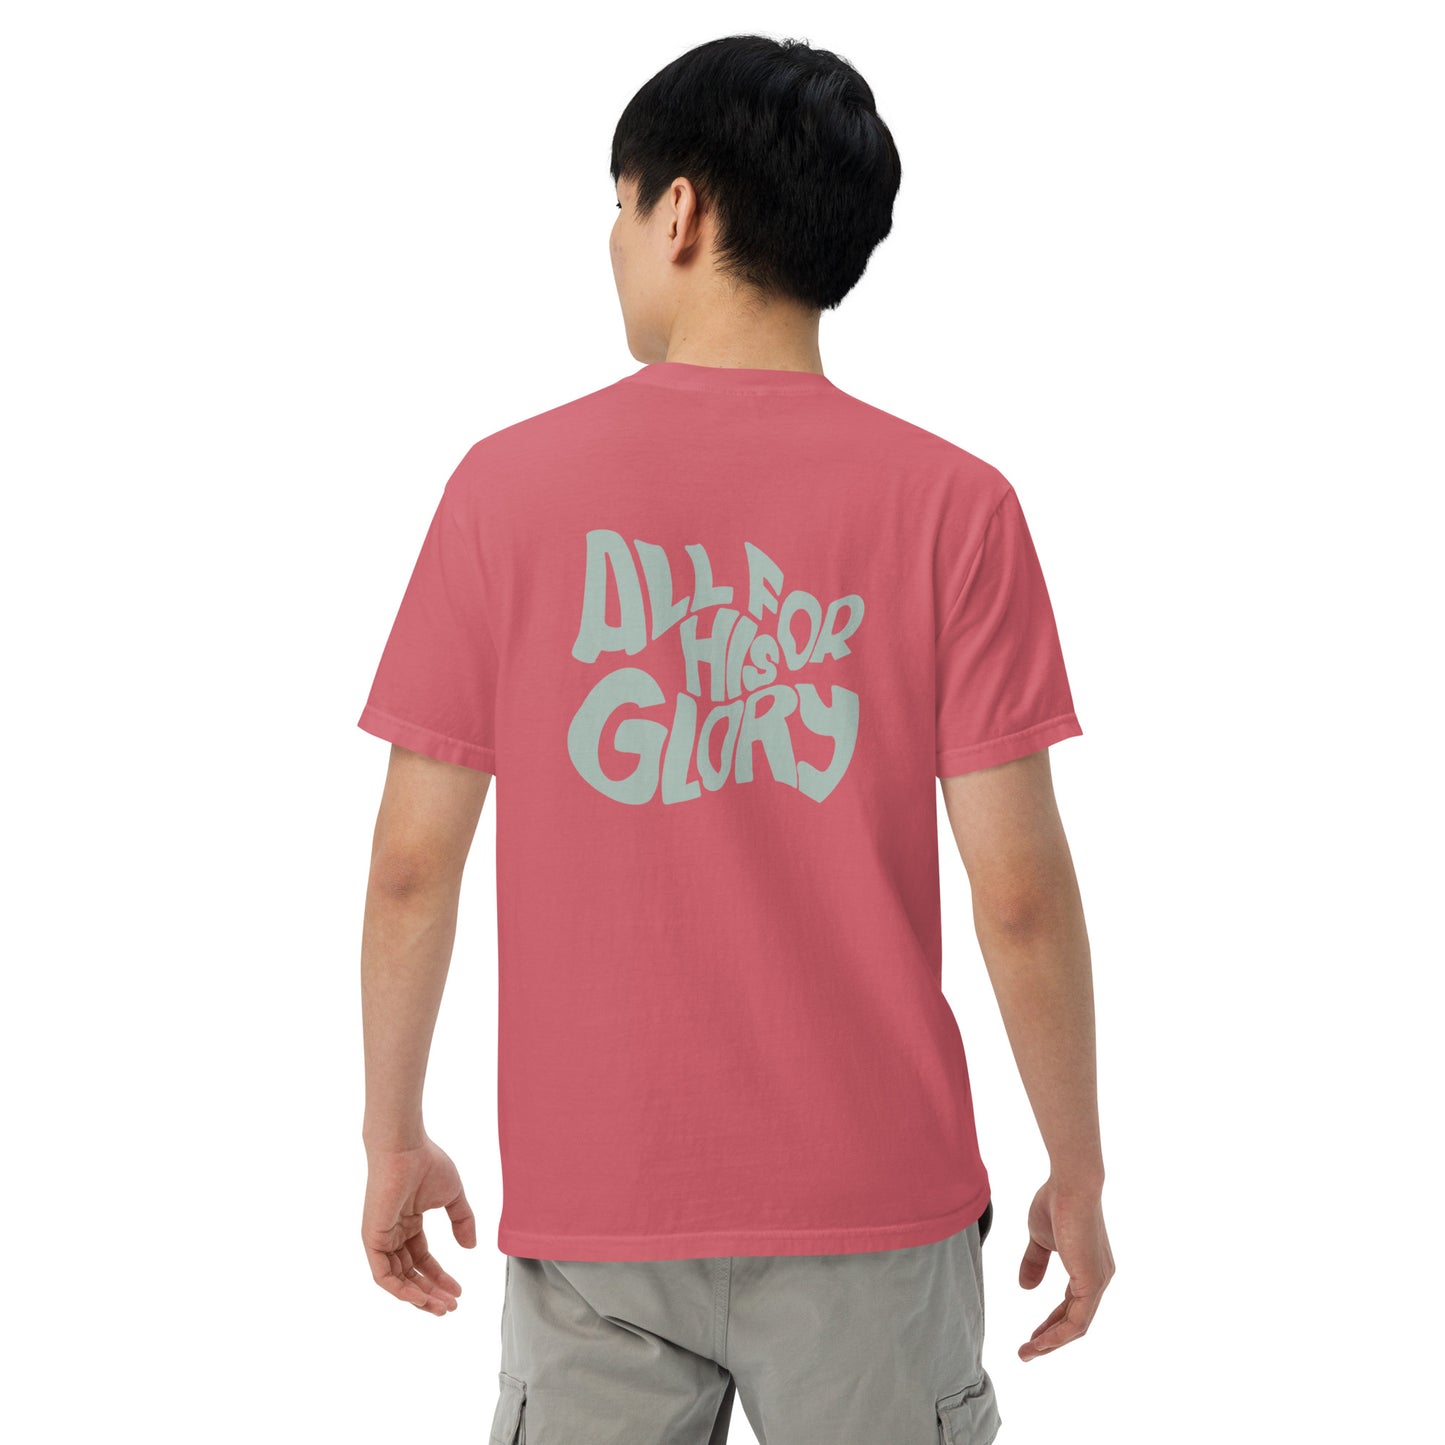 Gods glory garment-dyed heavyweight t-shirt